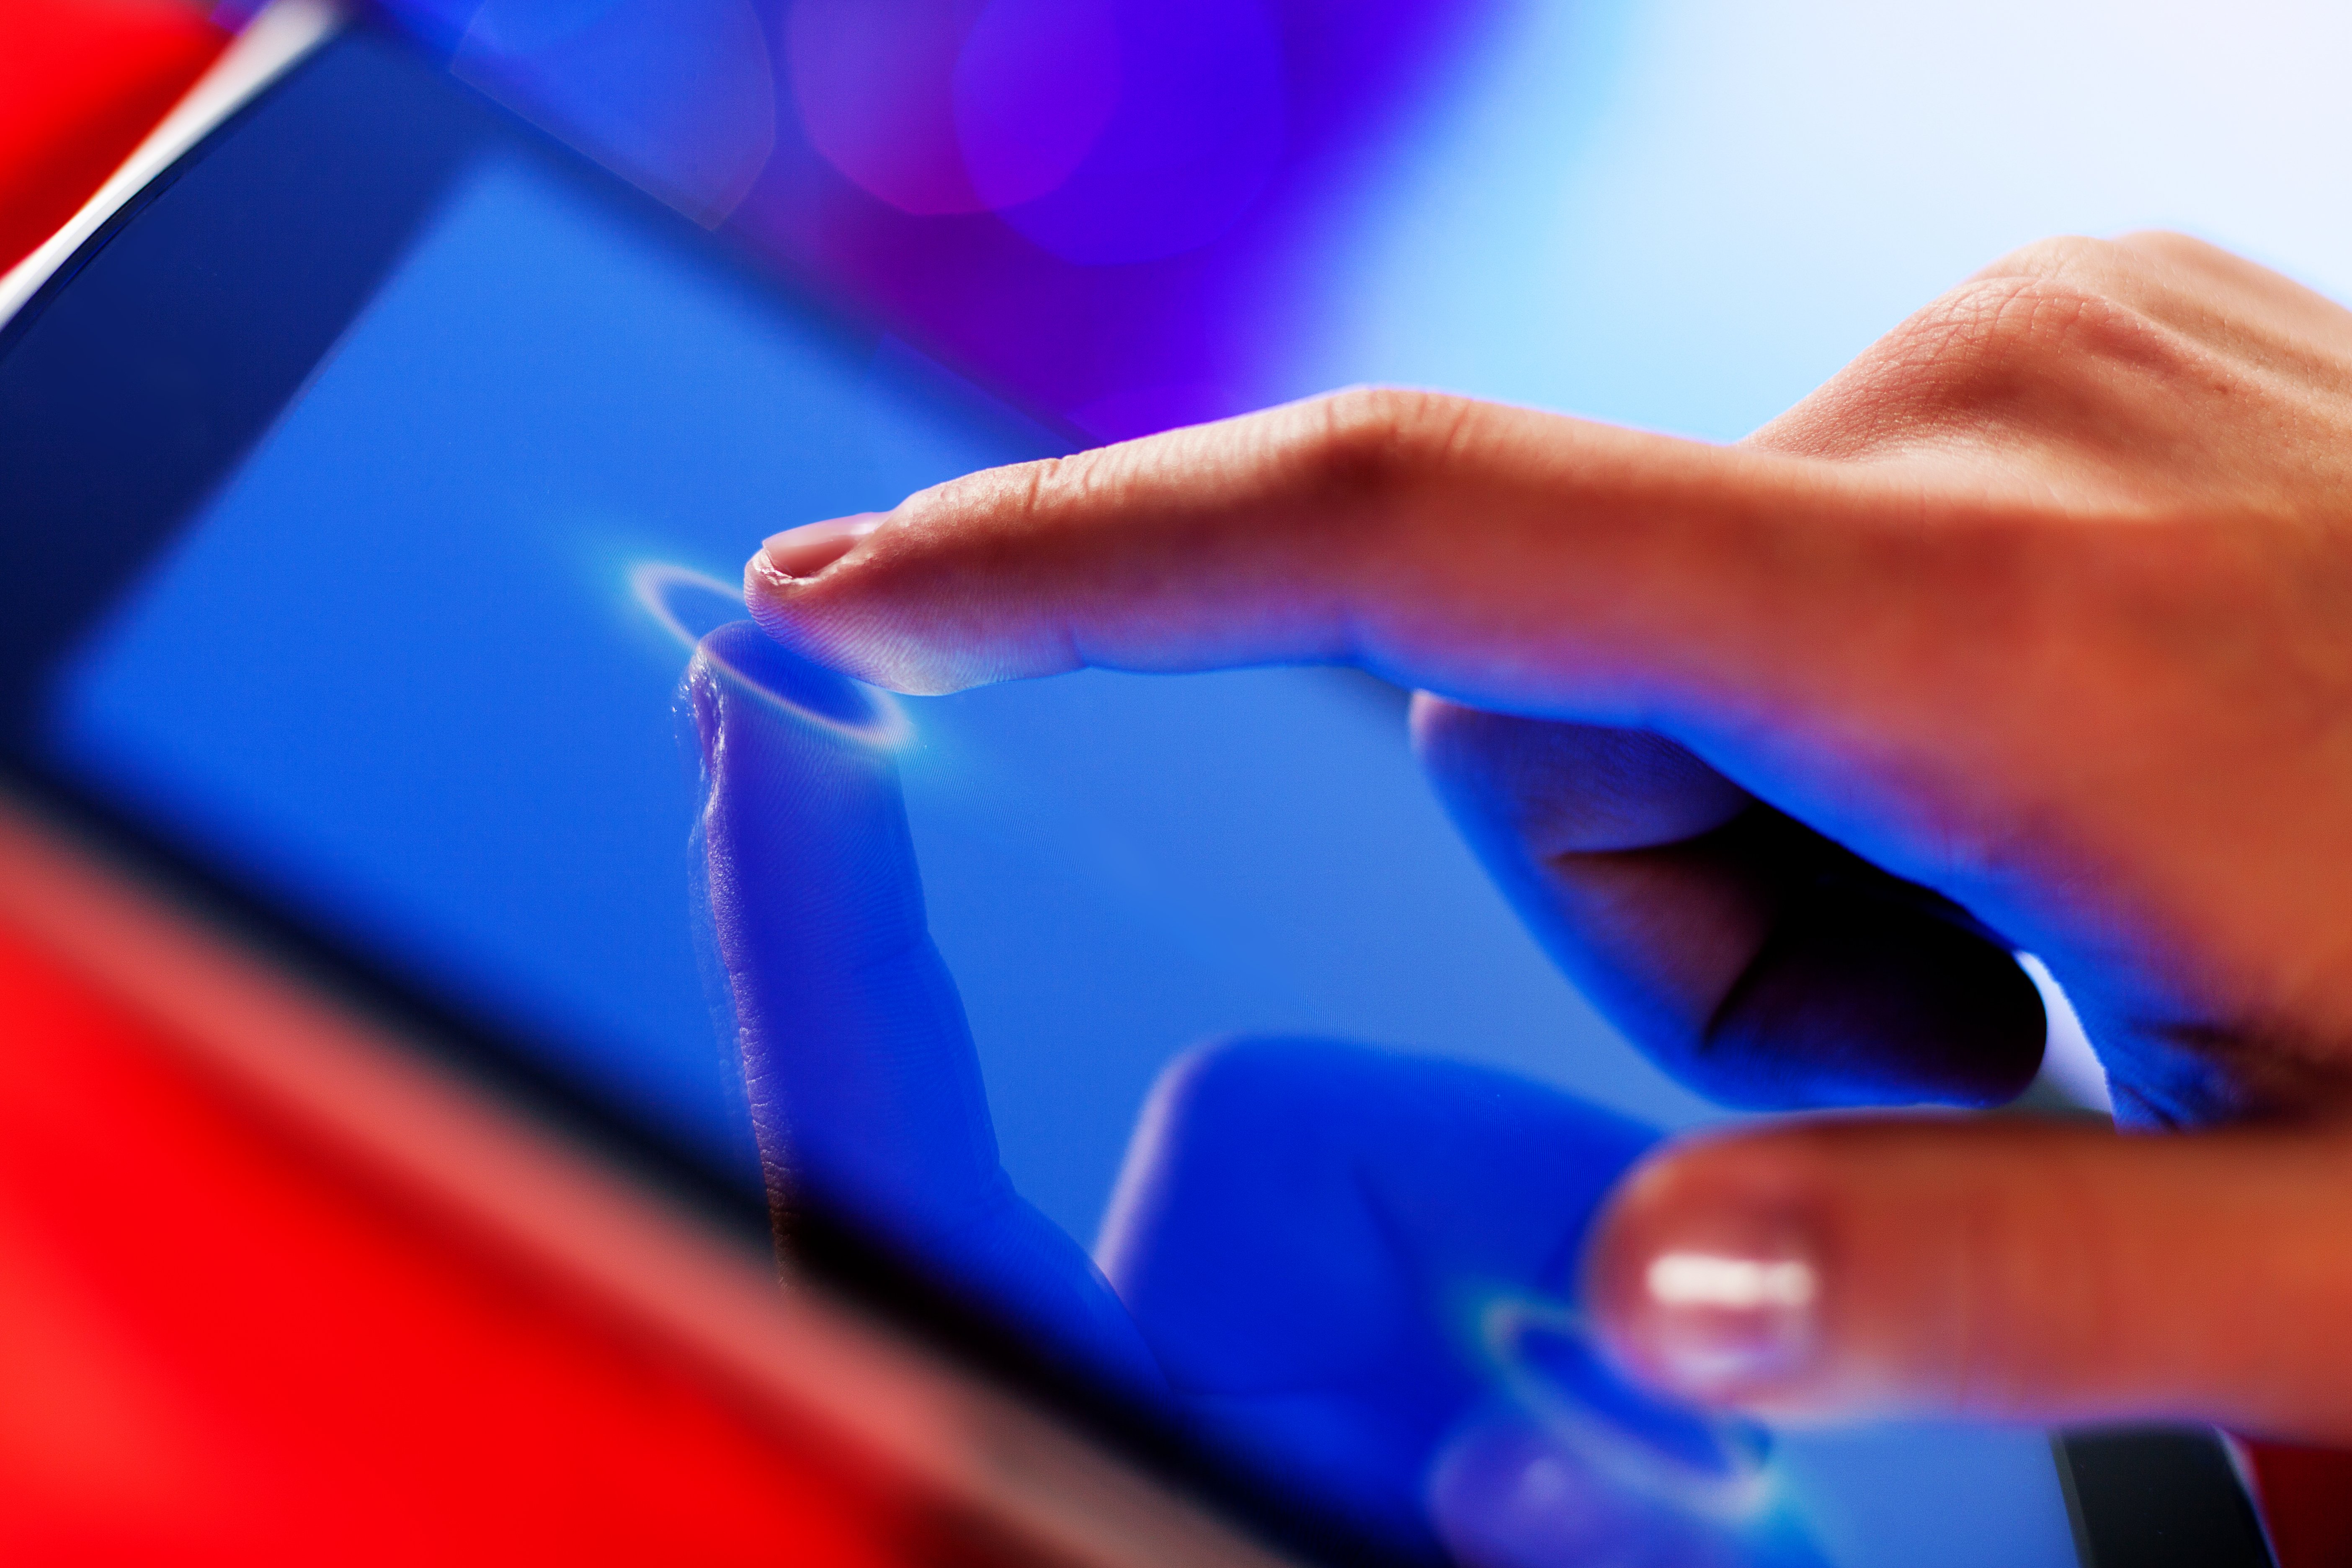 PDI_ LCD Touchscreen Anti-Glare, Anti-Reflective & Anti-Fingerprint Touch Panels